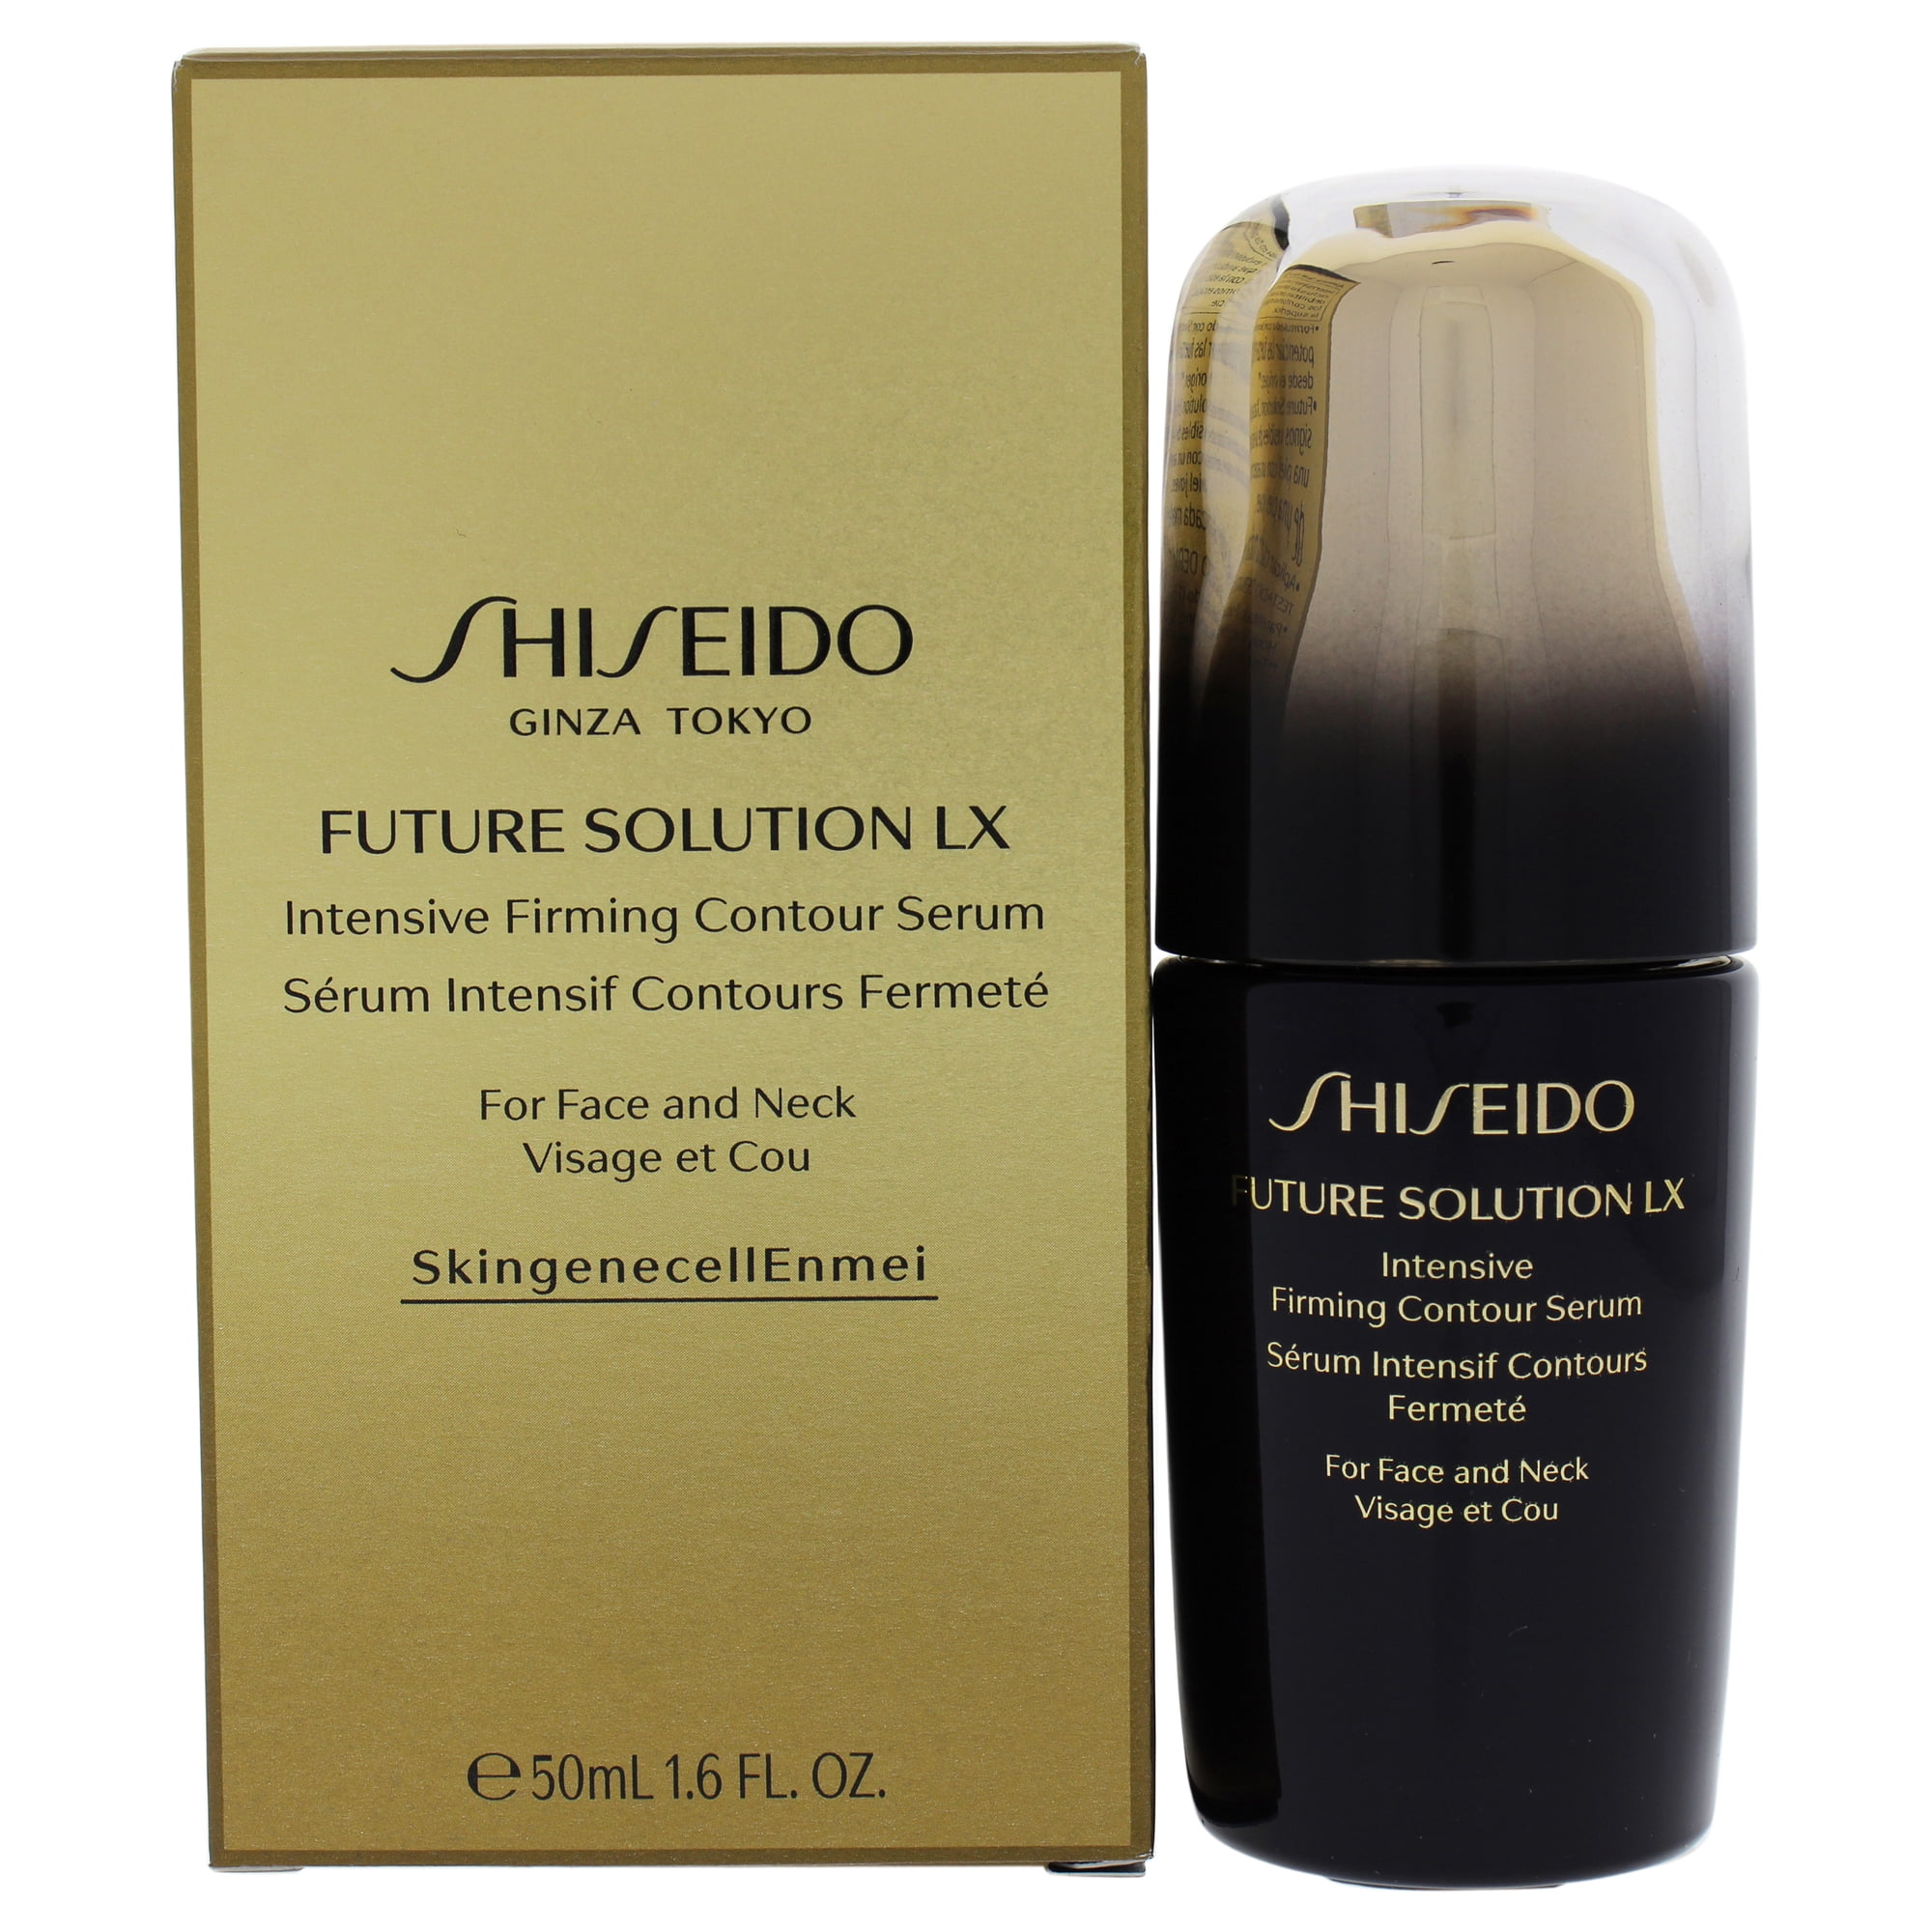 Shiseido firming. Shiseido Future solution LX Serum. Shiseido Future solution LX ночной крем чье производство. Шисейдо тон Футуре отзывы. Shiseido 101 Ginkgo отзывы.